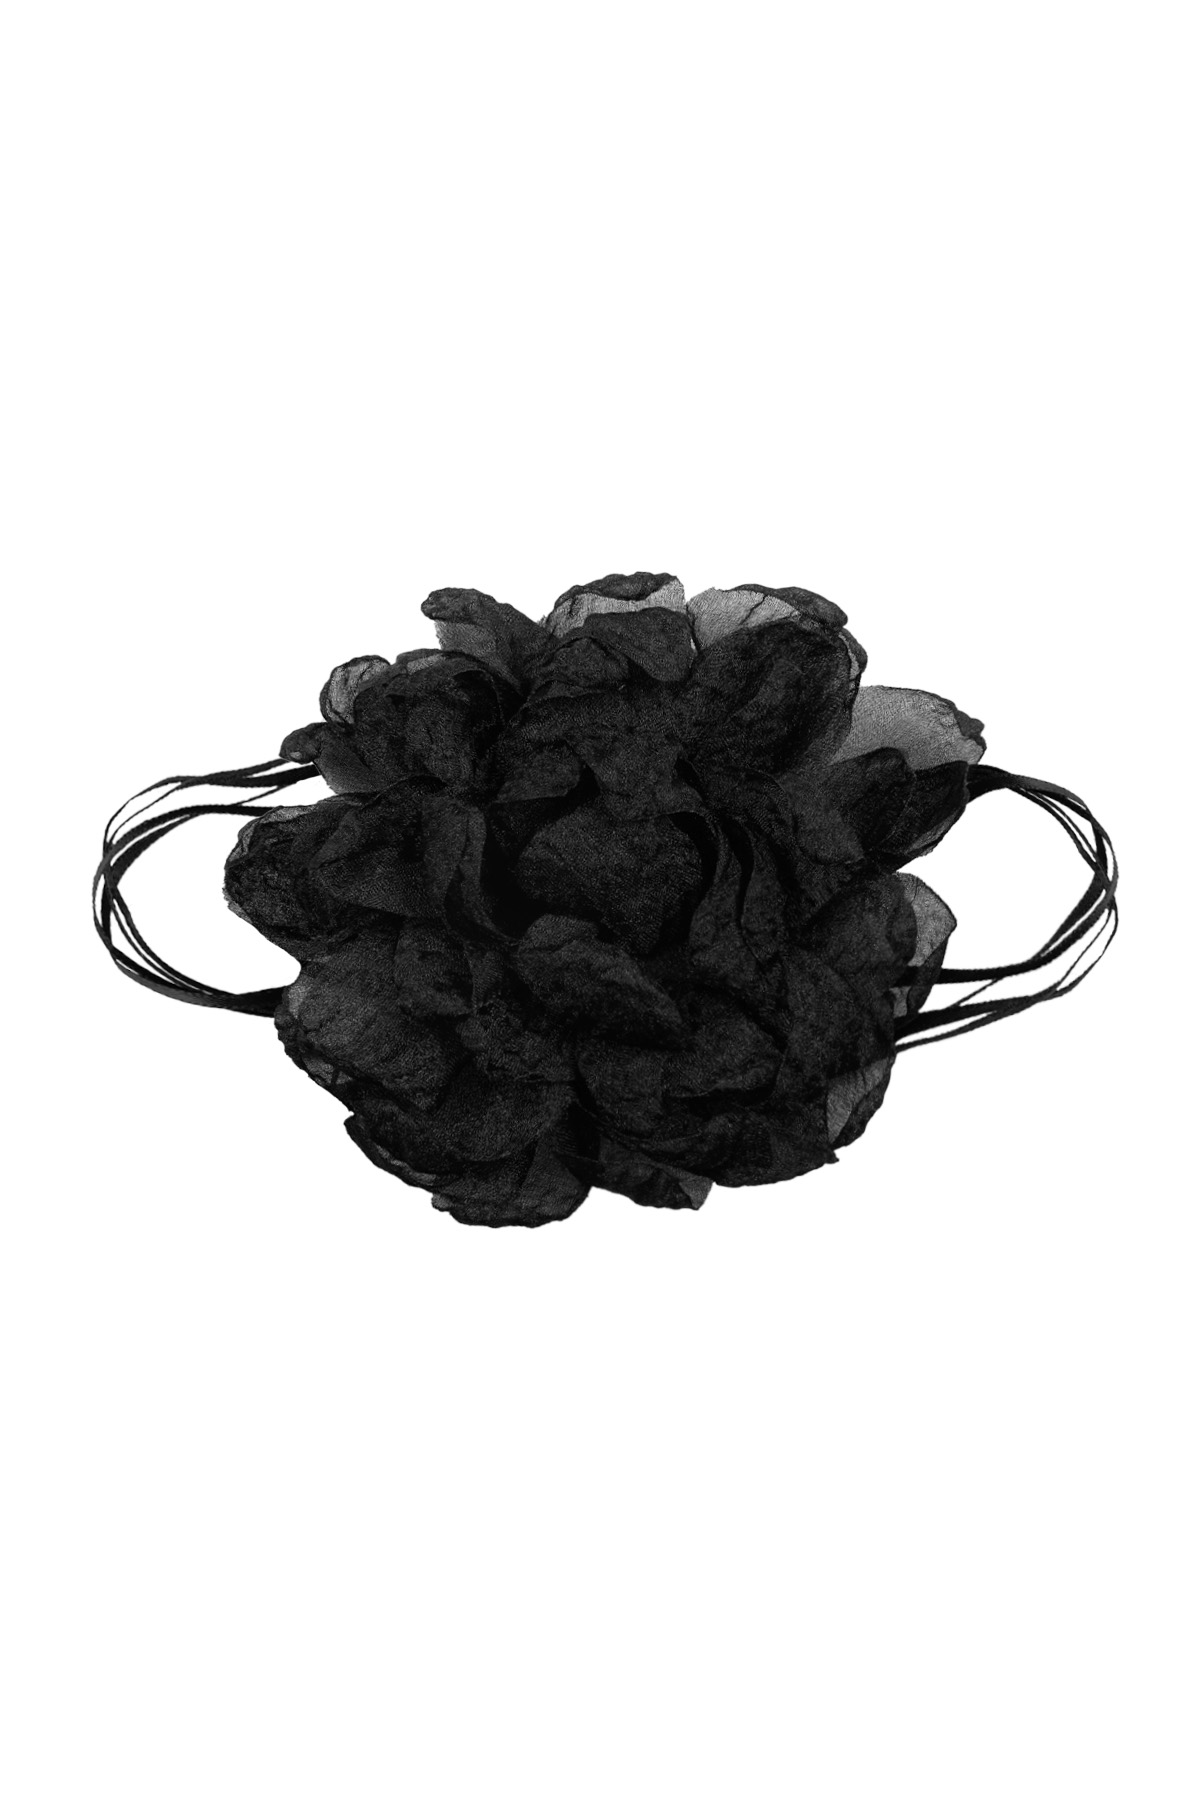 Ketting lint met bloem - zwart h5 